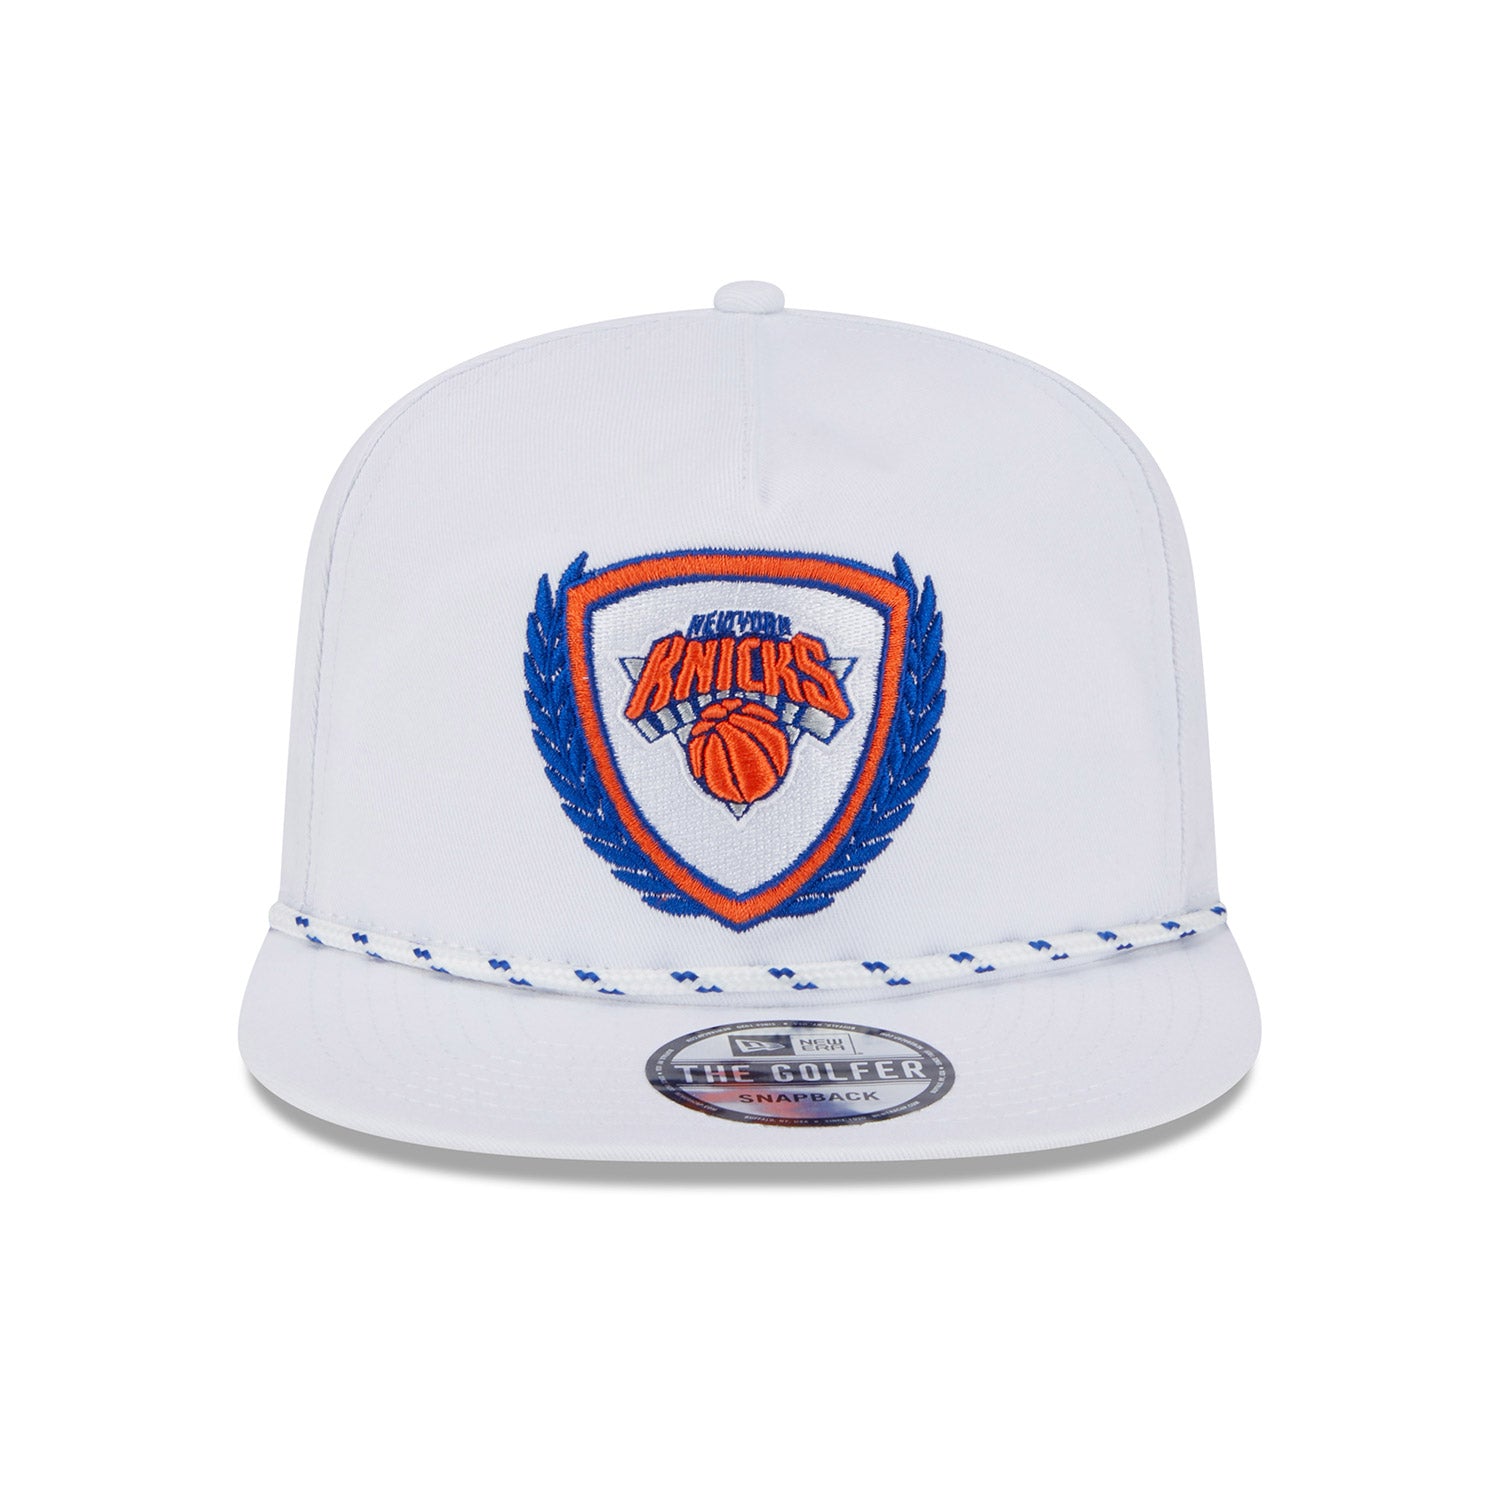 New Era Knicks Golfer White Leaves Snapback Hat - Front View